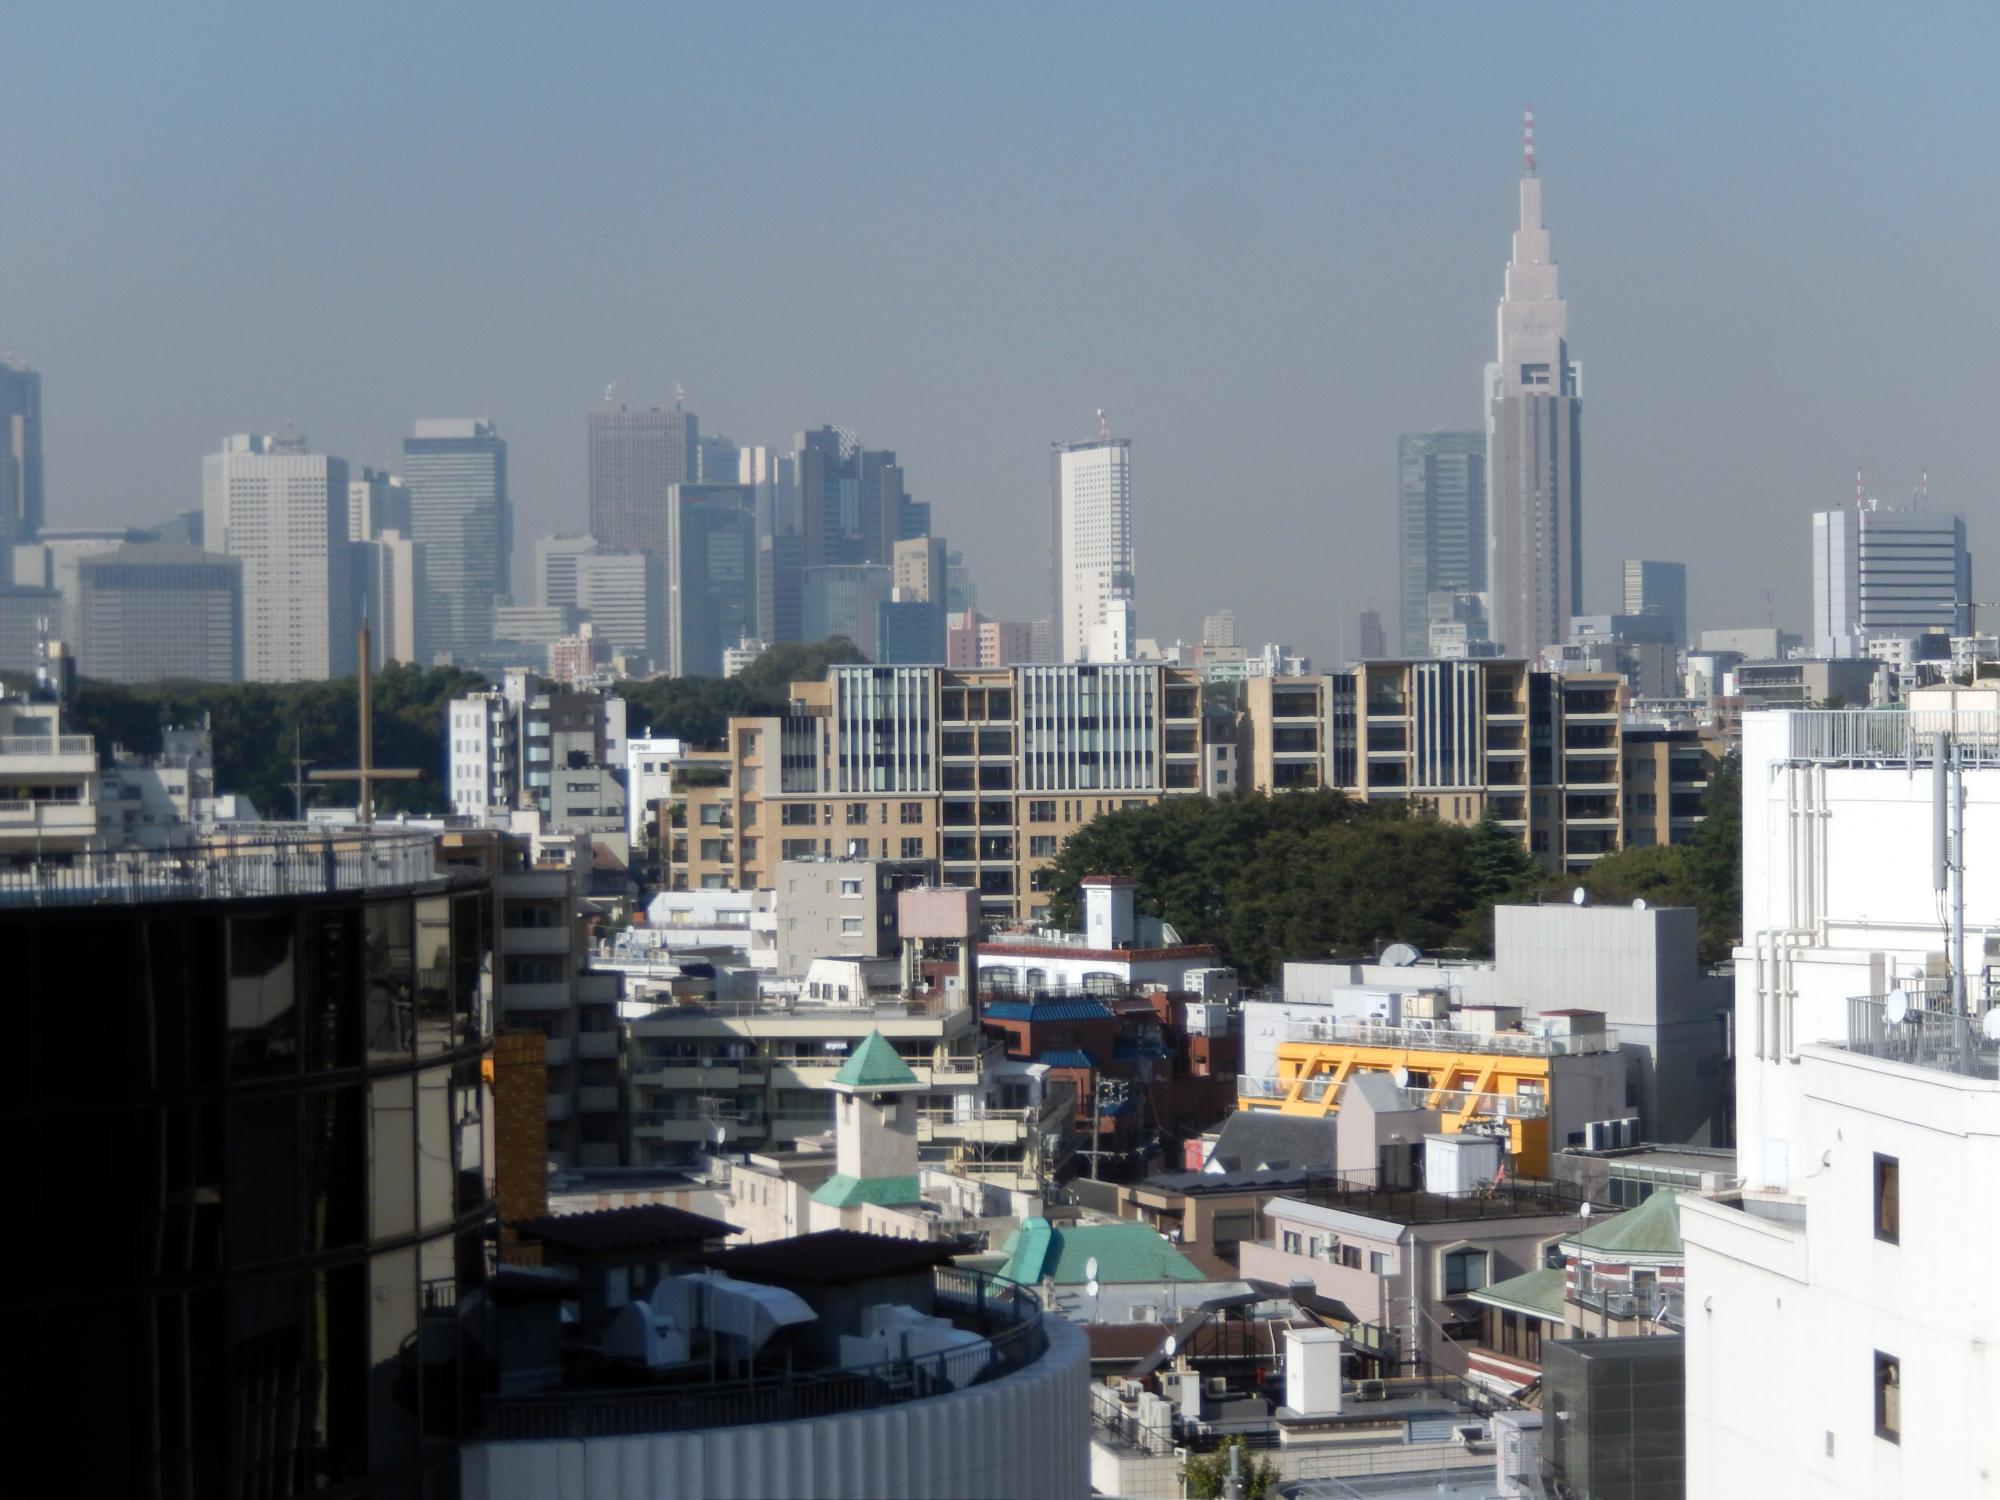 Tokyo (2016) - Midtown Skyline #1